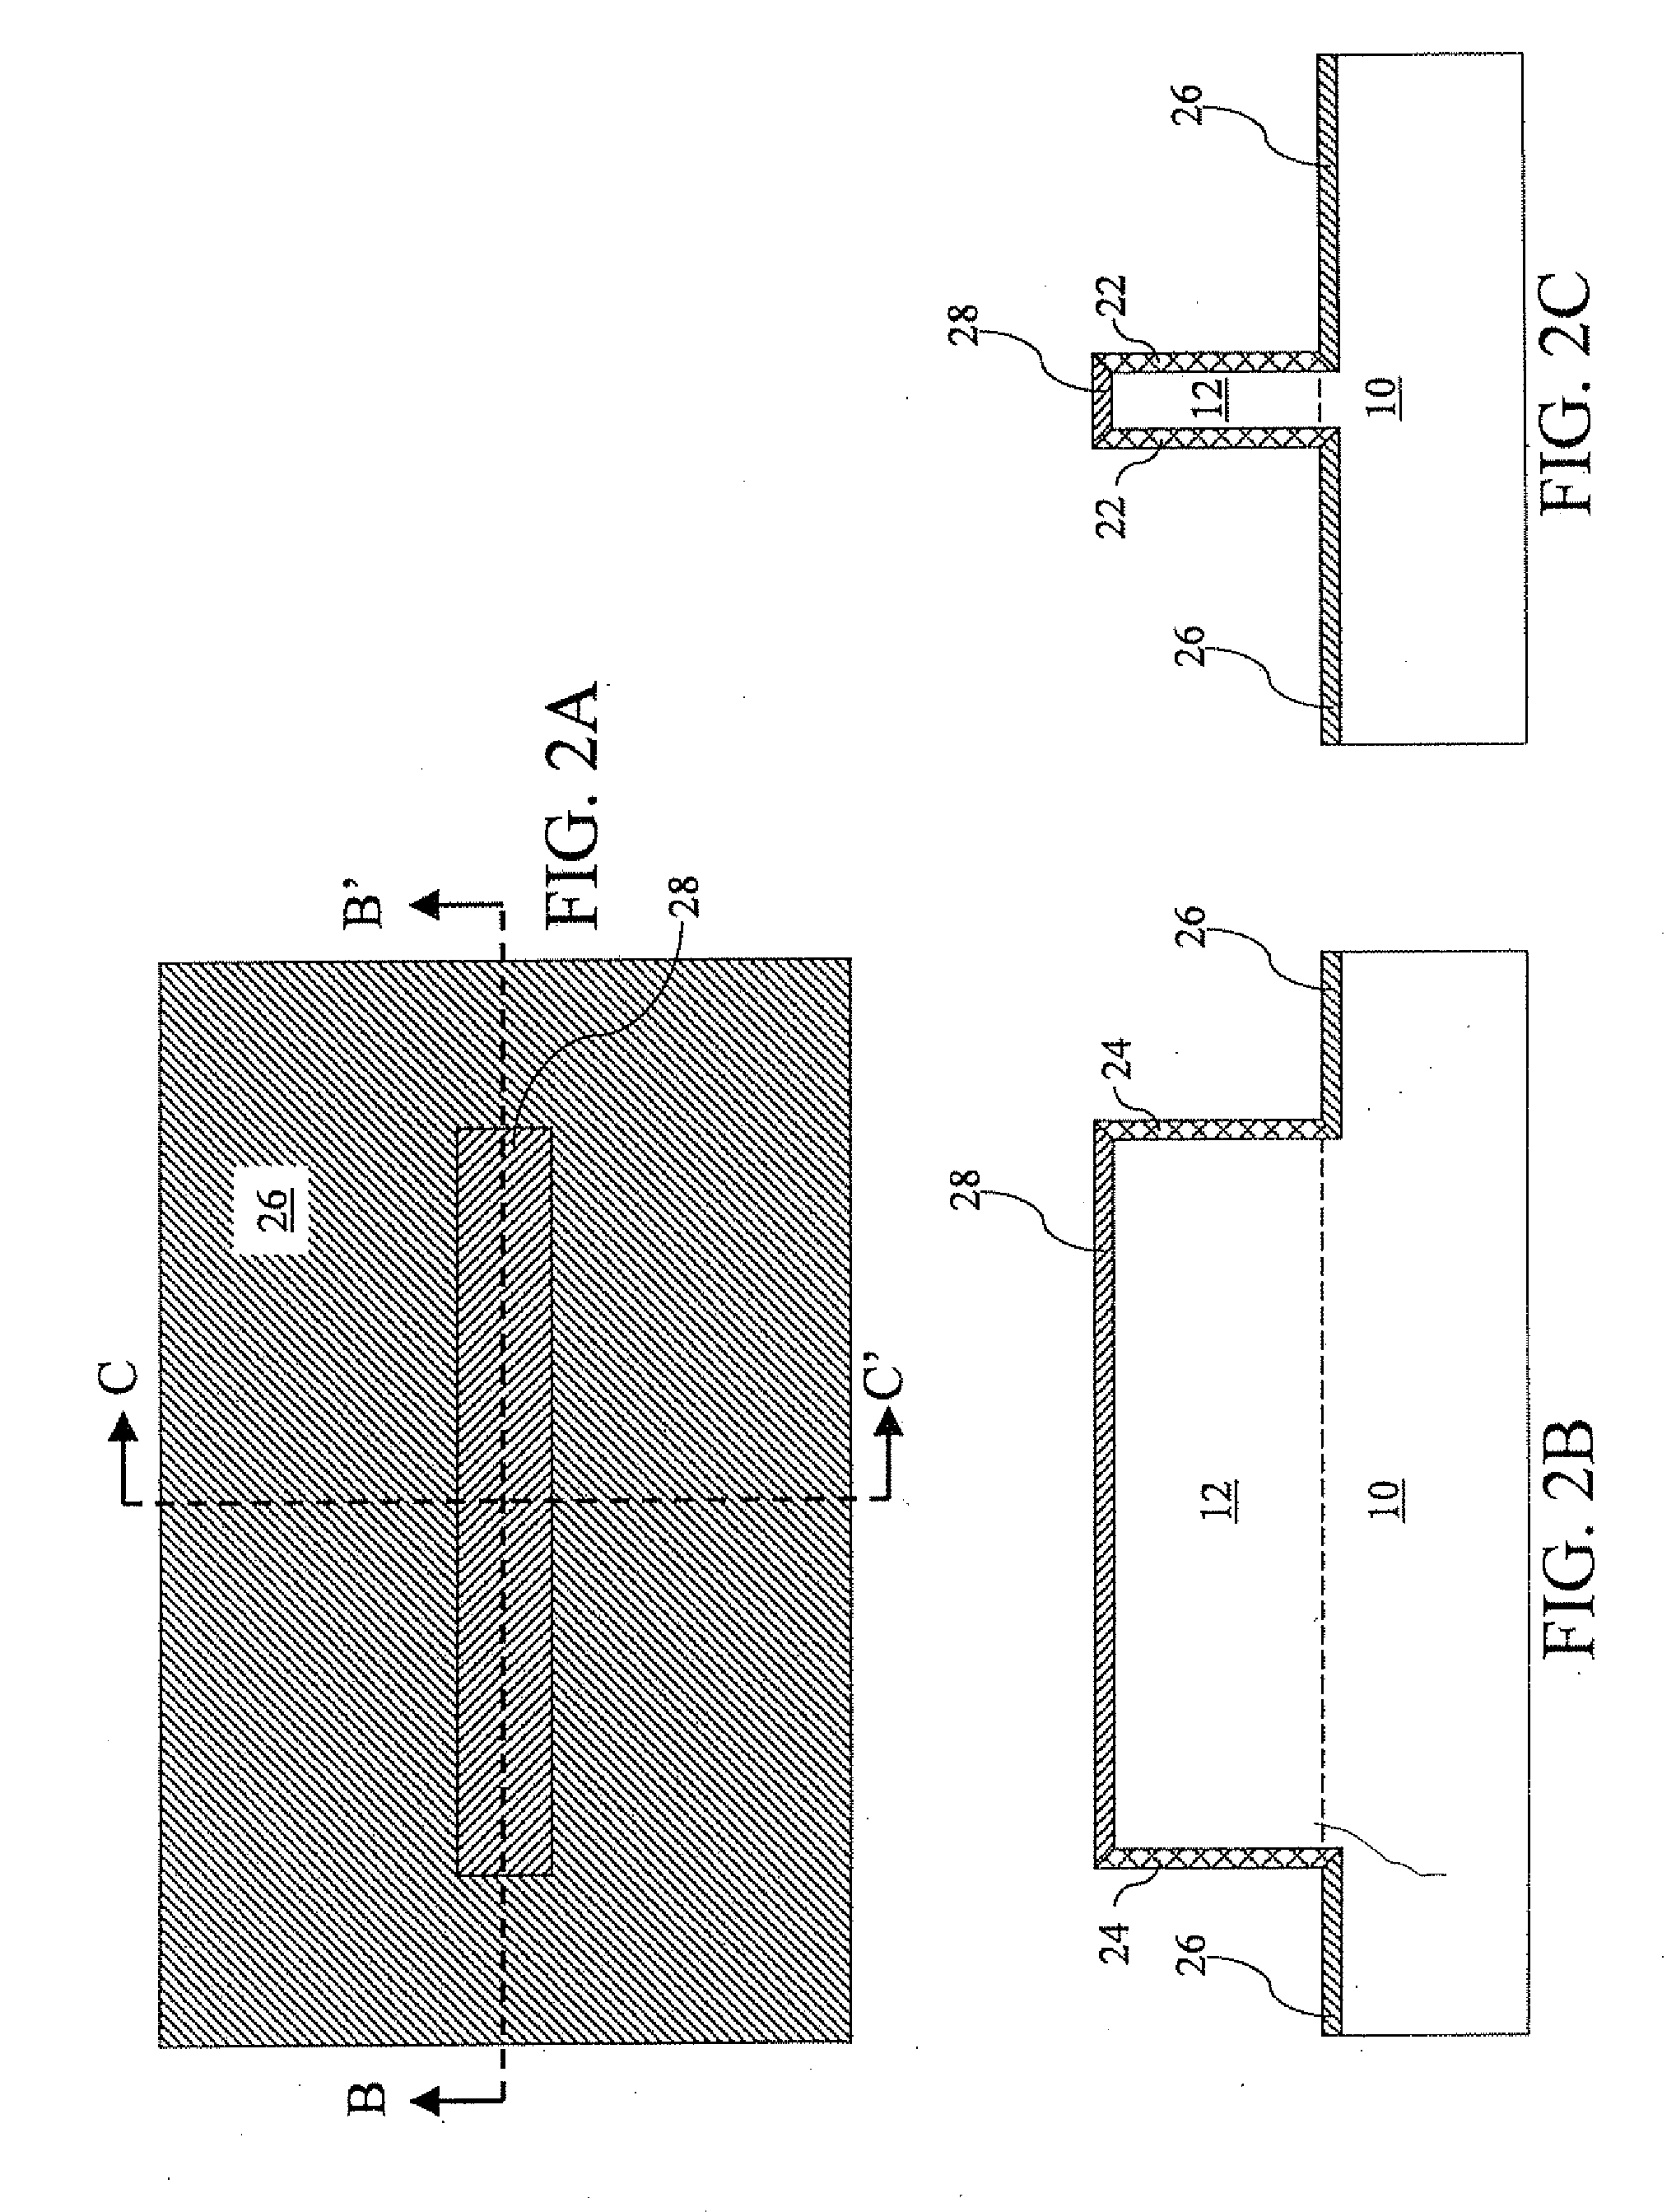 Graphene-based transistor